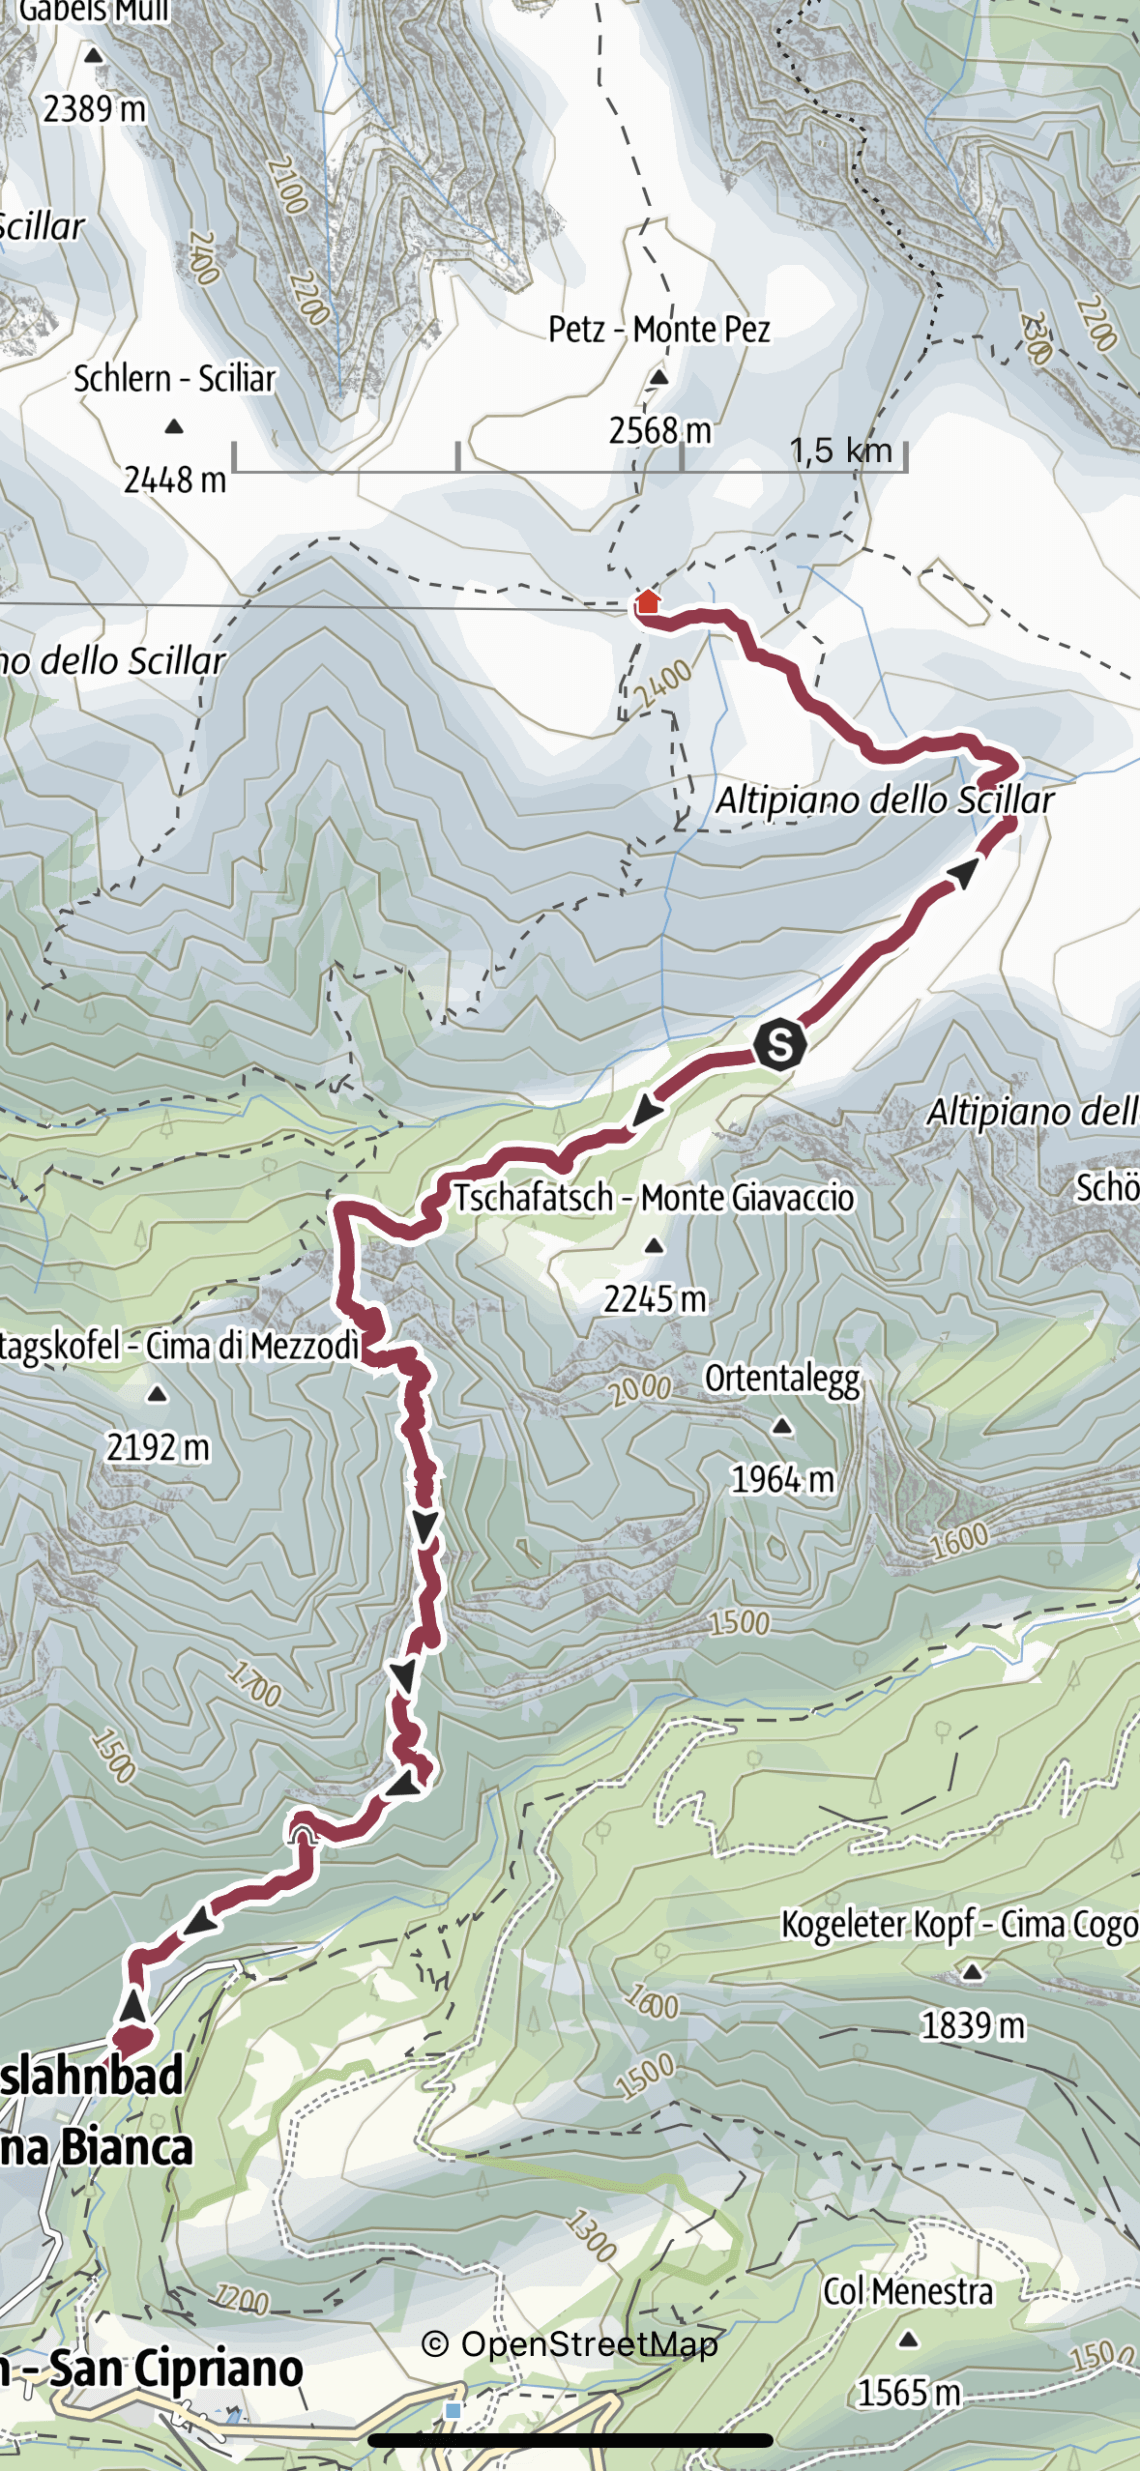 Route dag 1 3 daagse huttentocht Dolomieten